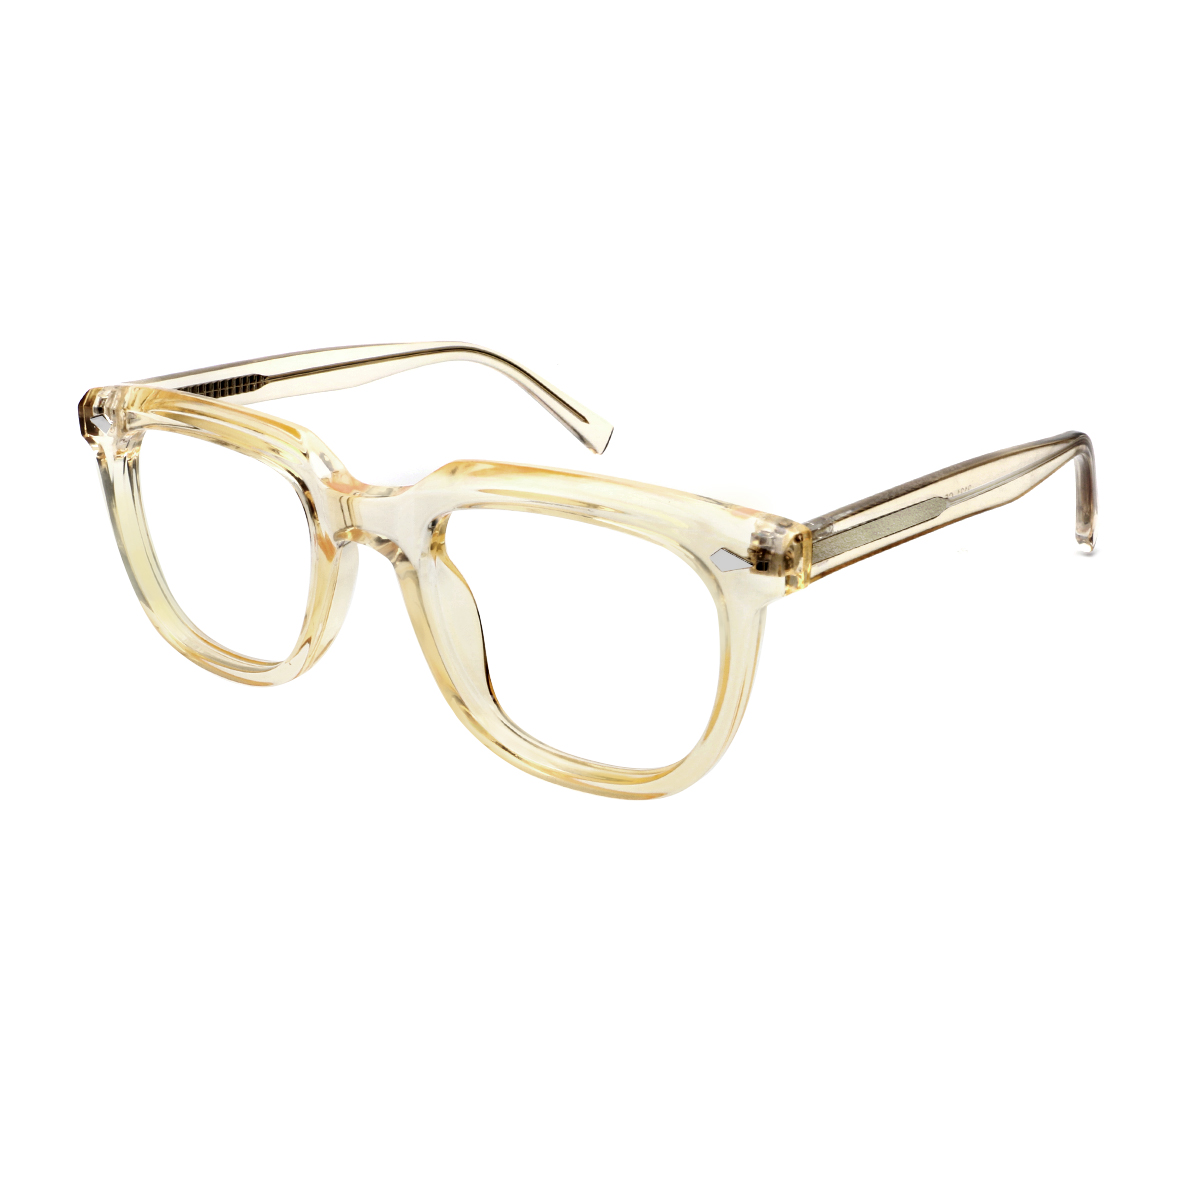 Sporta - Square Transparent-Brown Reading Glasses for Men & Women